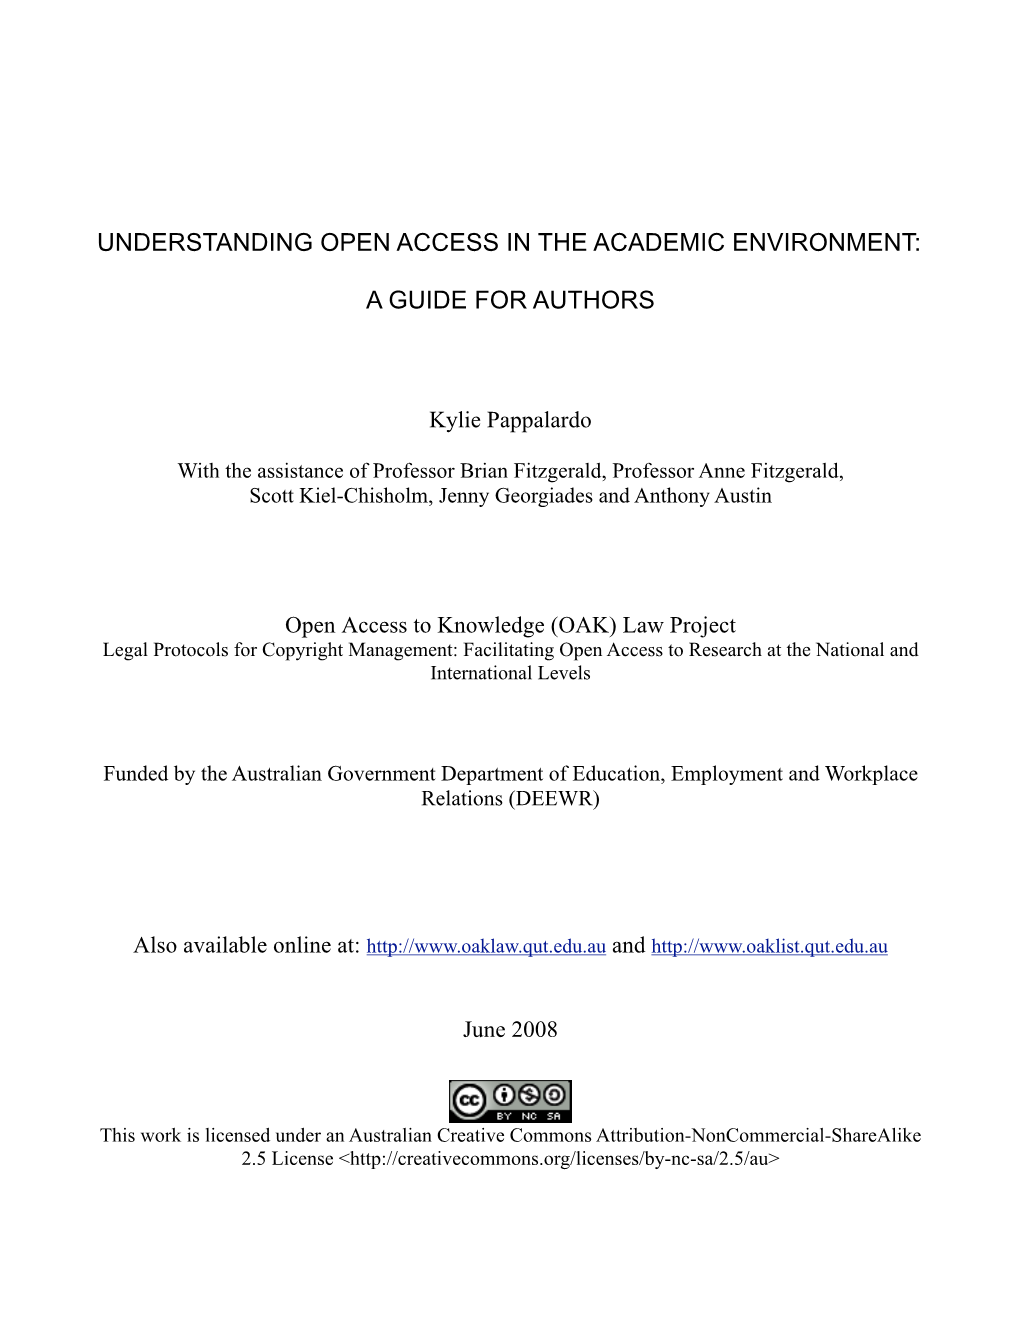 Understanding Open Access in an Academic Environment